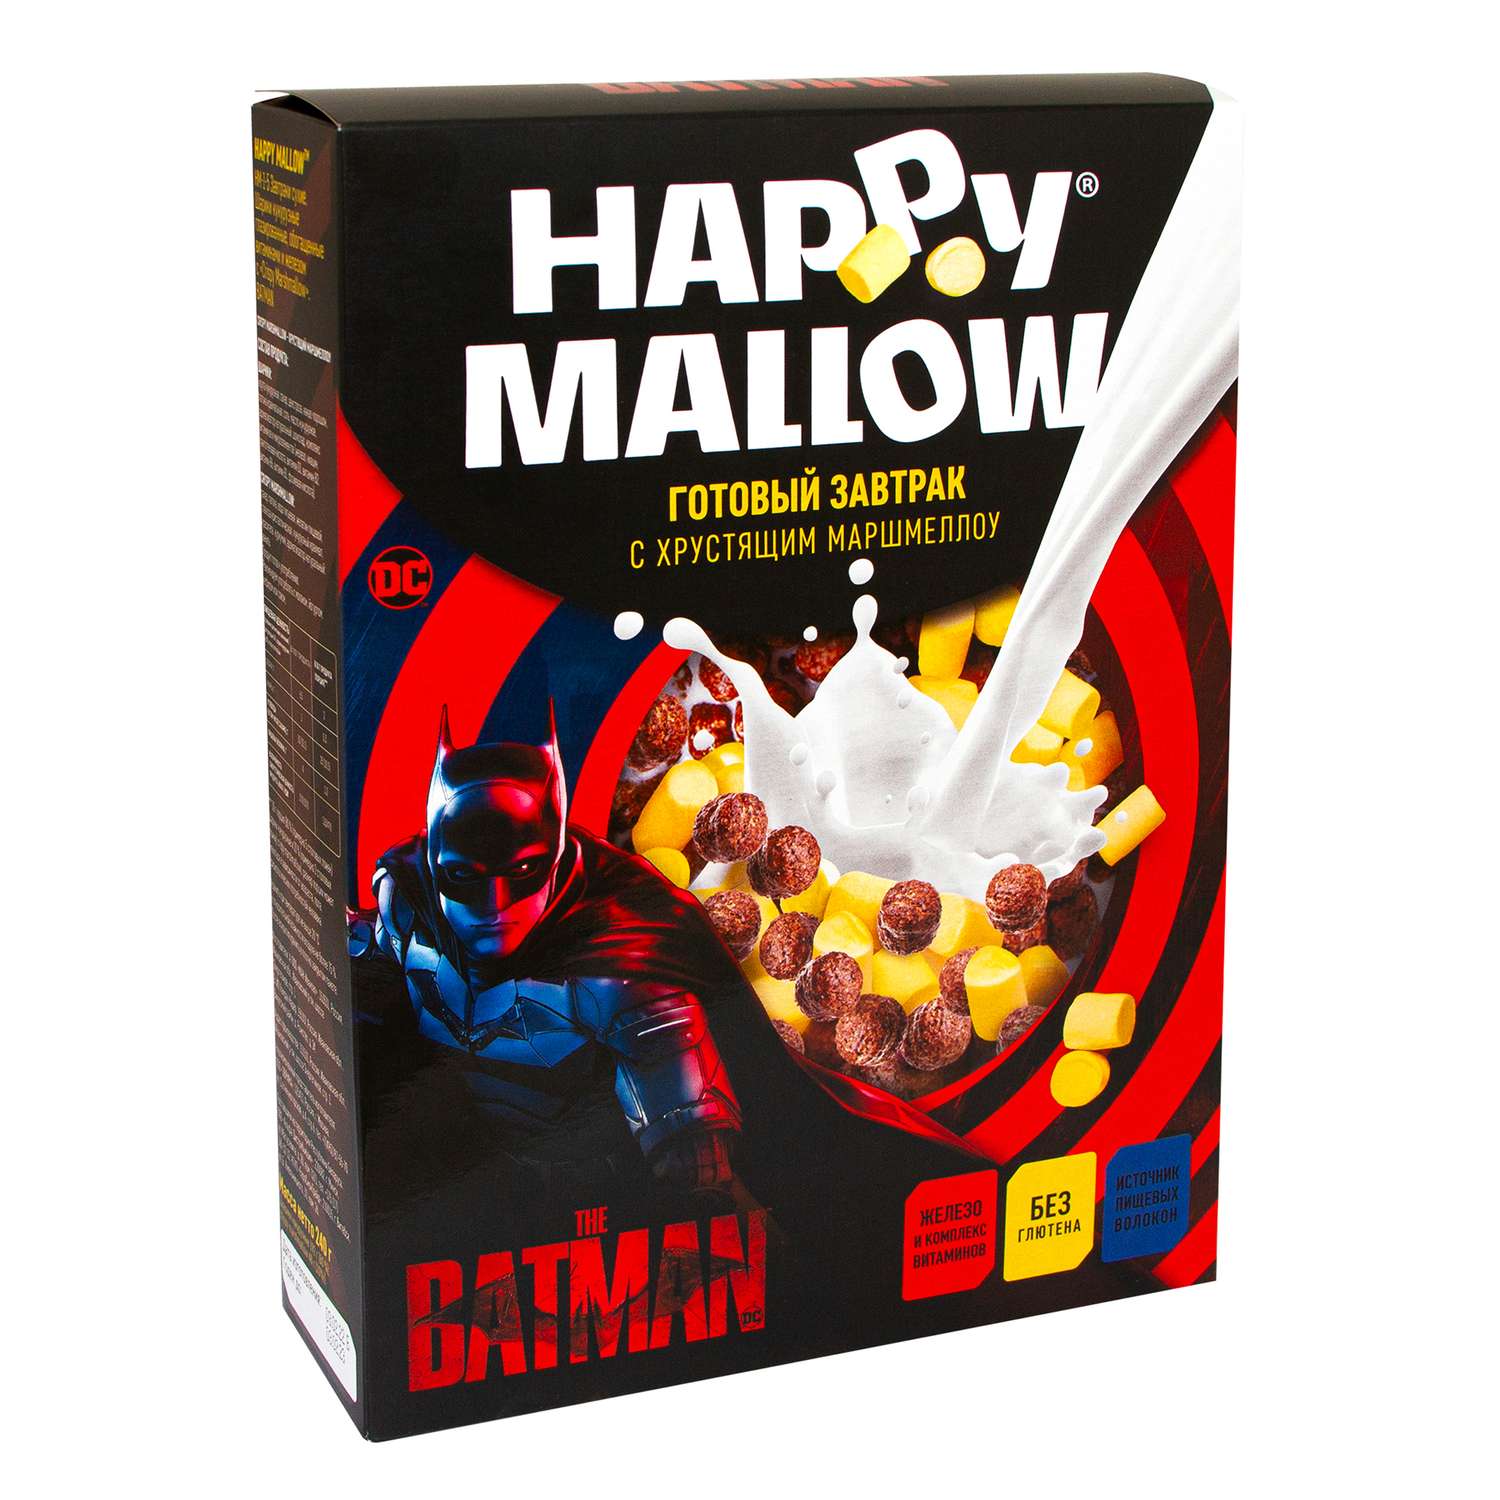 Завтрак с хрустящим маршмеллоу Сладкая сказка Happy Mallow Batman - фото 1